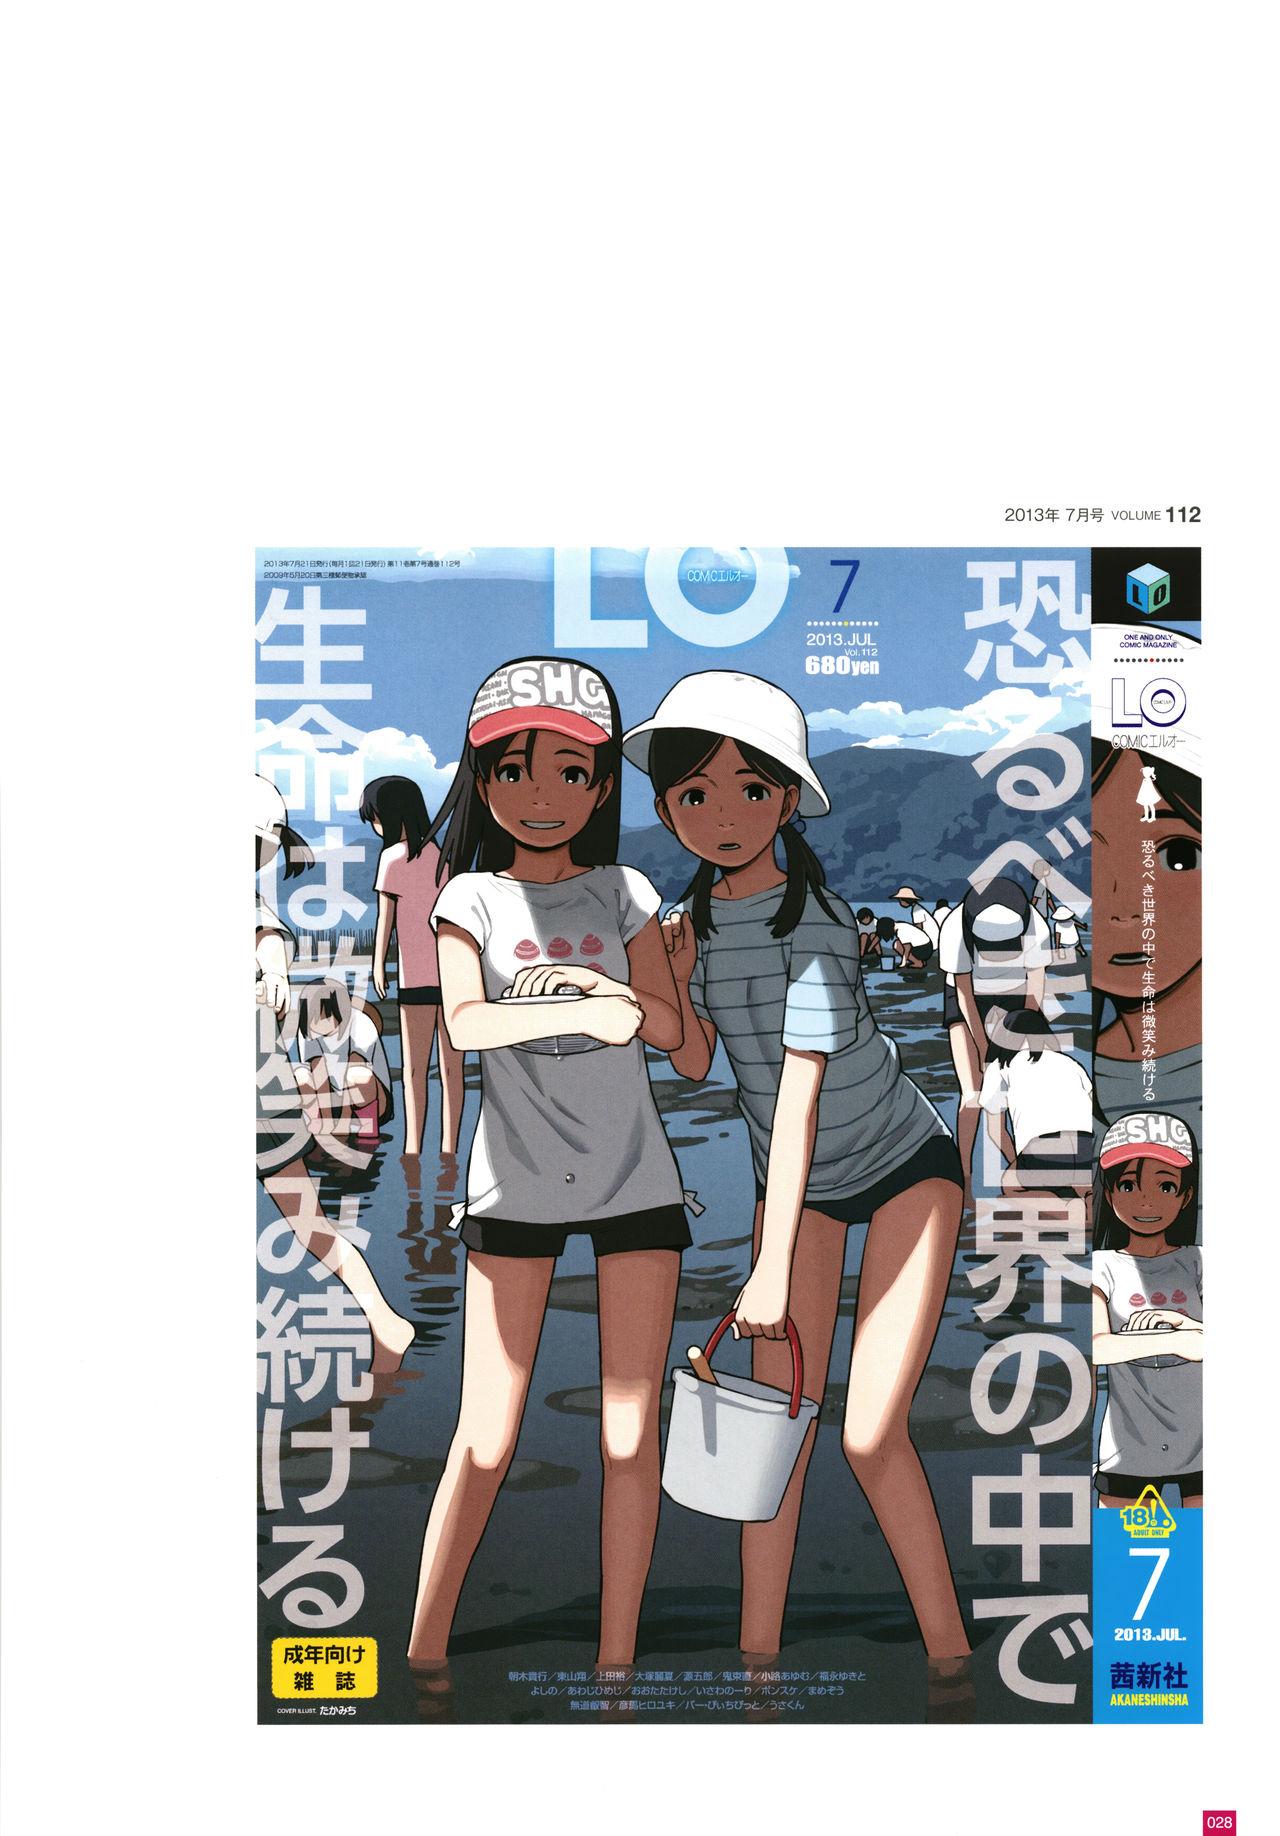 [Takamichi] LO Artbook 2-B TAKAMICHI LO-fi WORKS 30